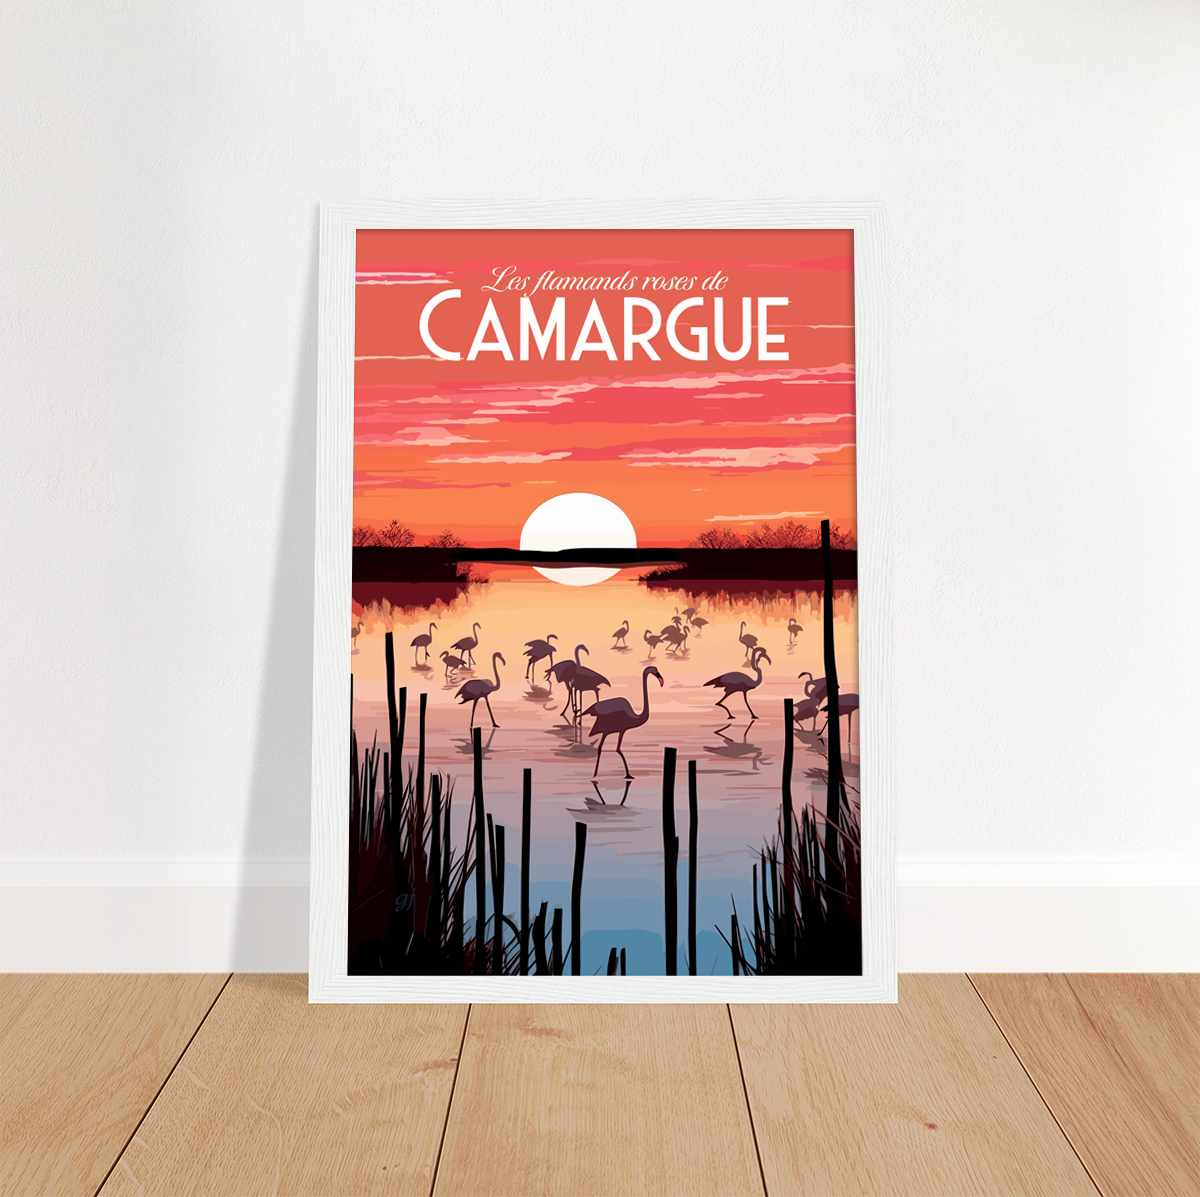 Camargue poster by bon voyage design